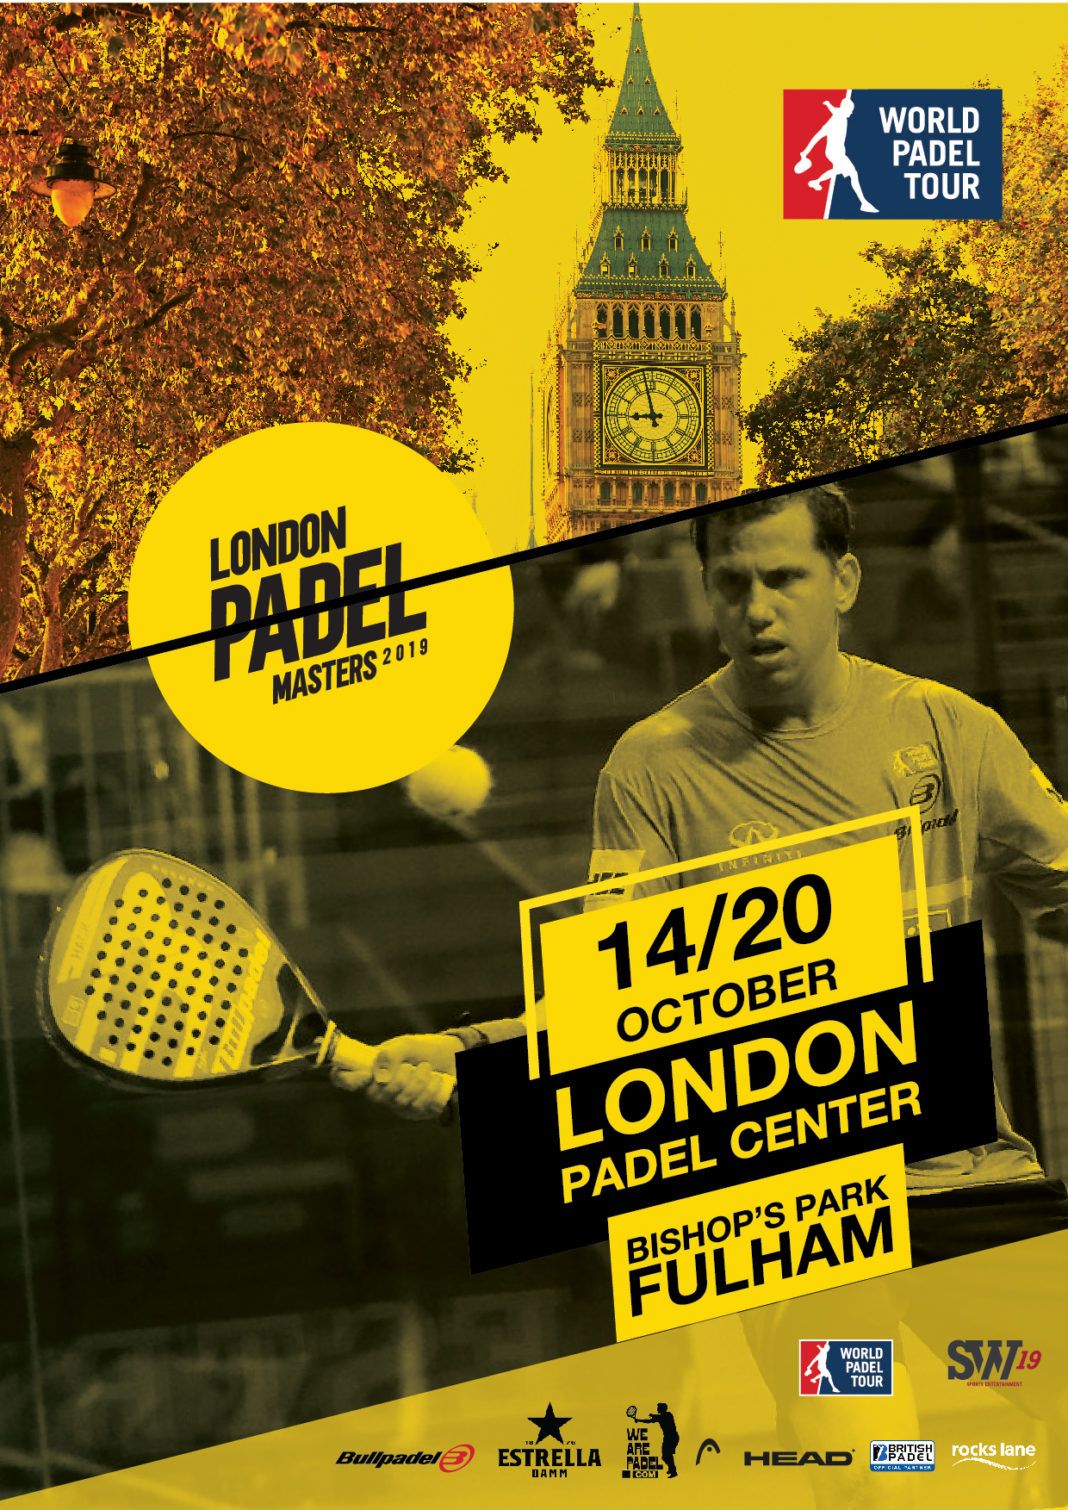 Affischen för London Master of the World Padel Tour.